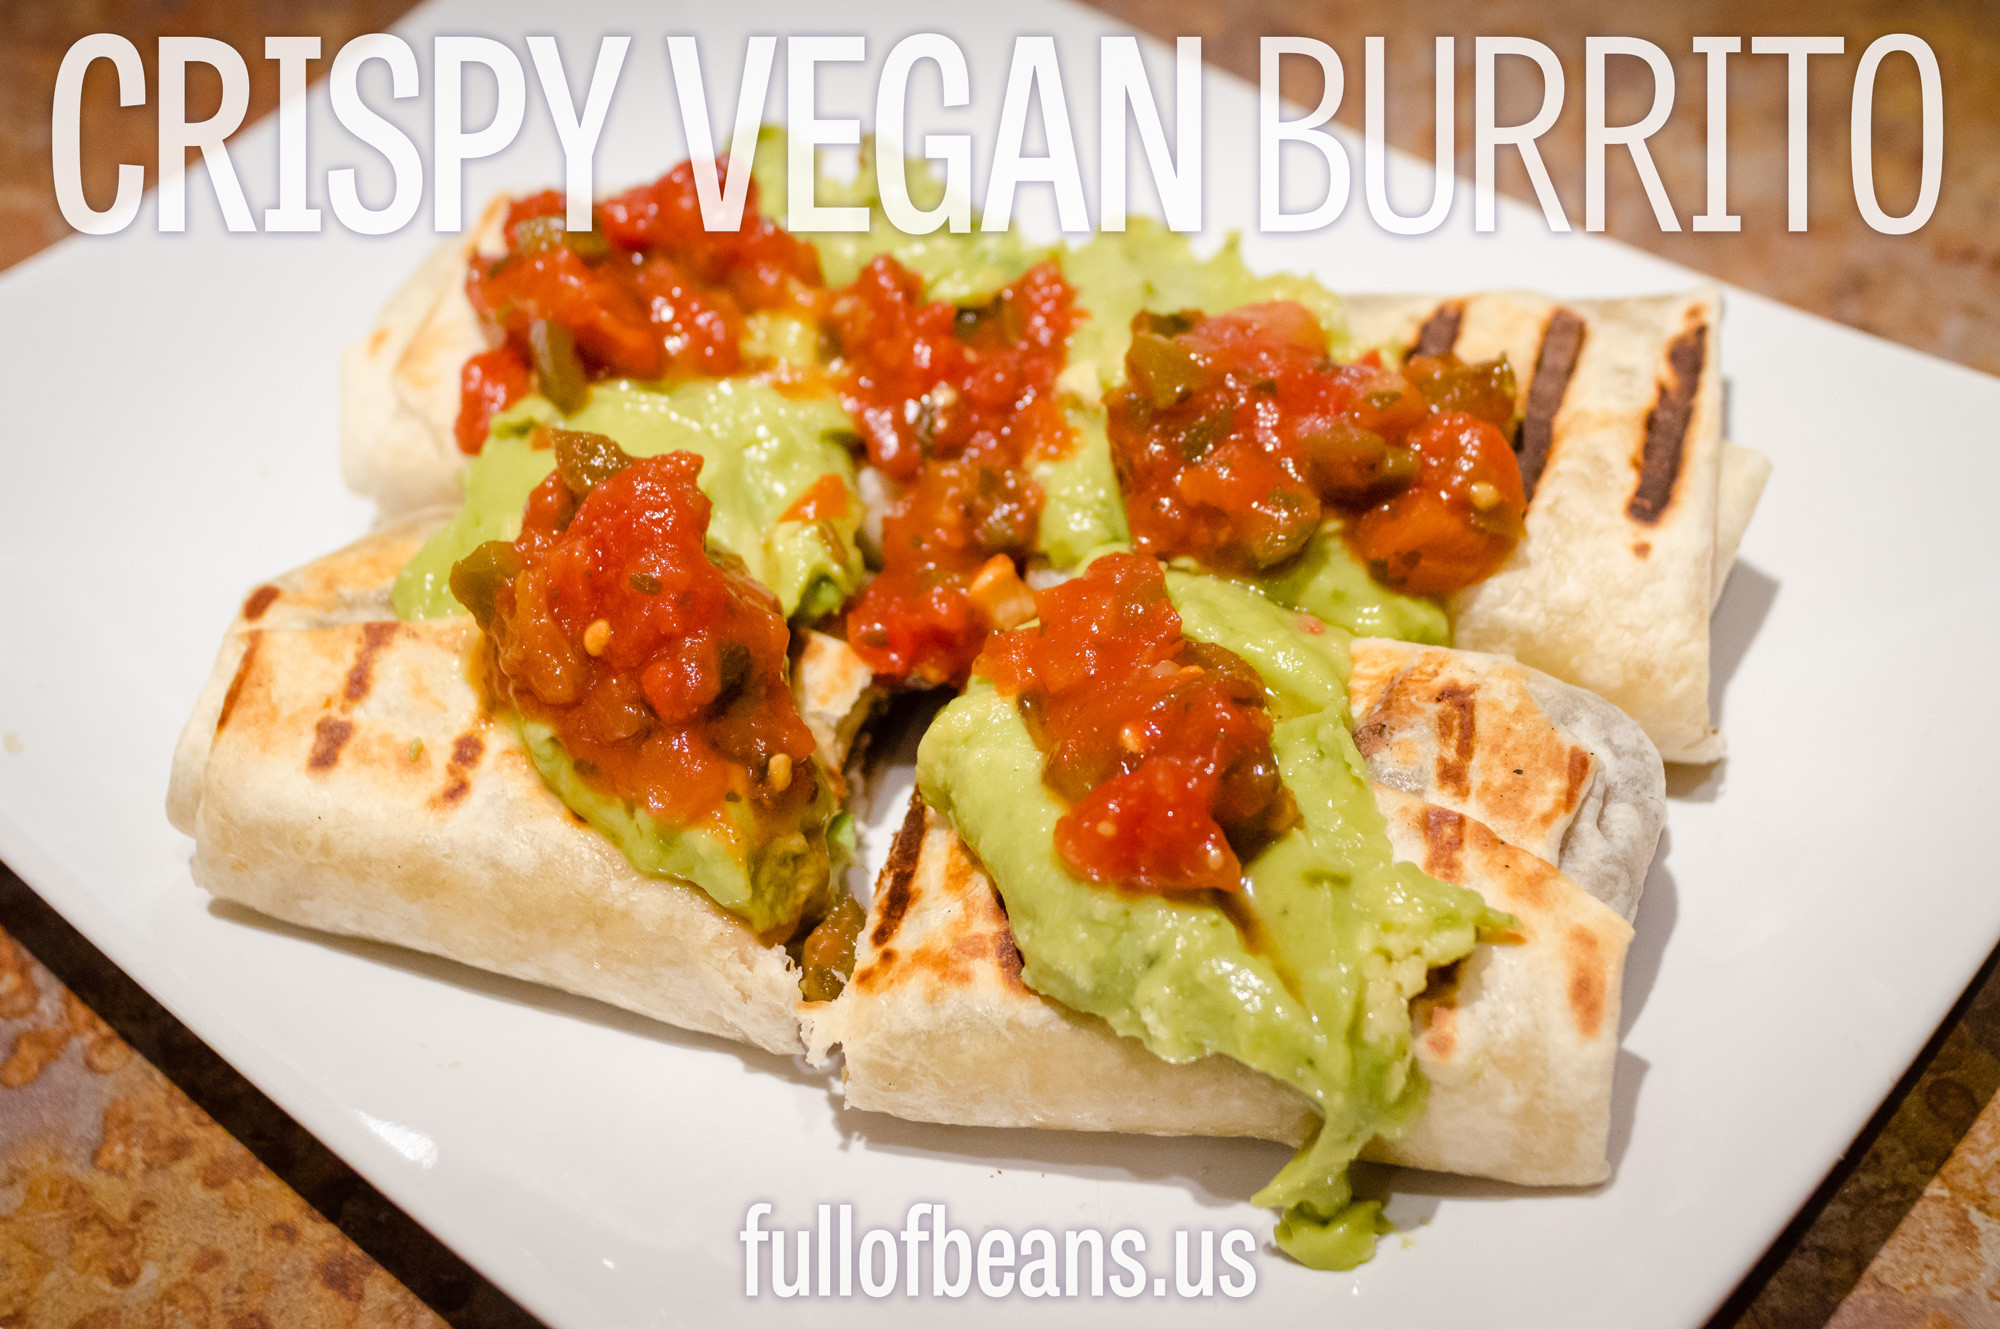 Vegetarian Burrito Recipes
 ve arian burrito recipe refried beans